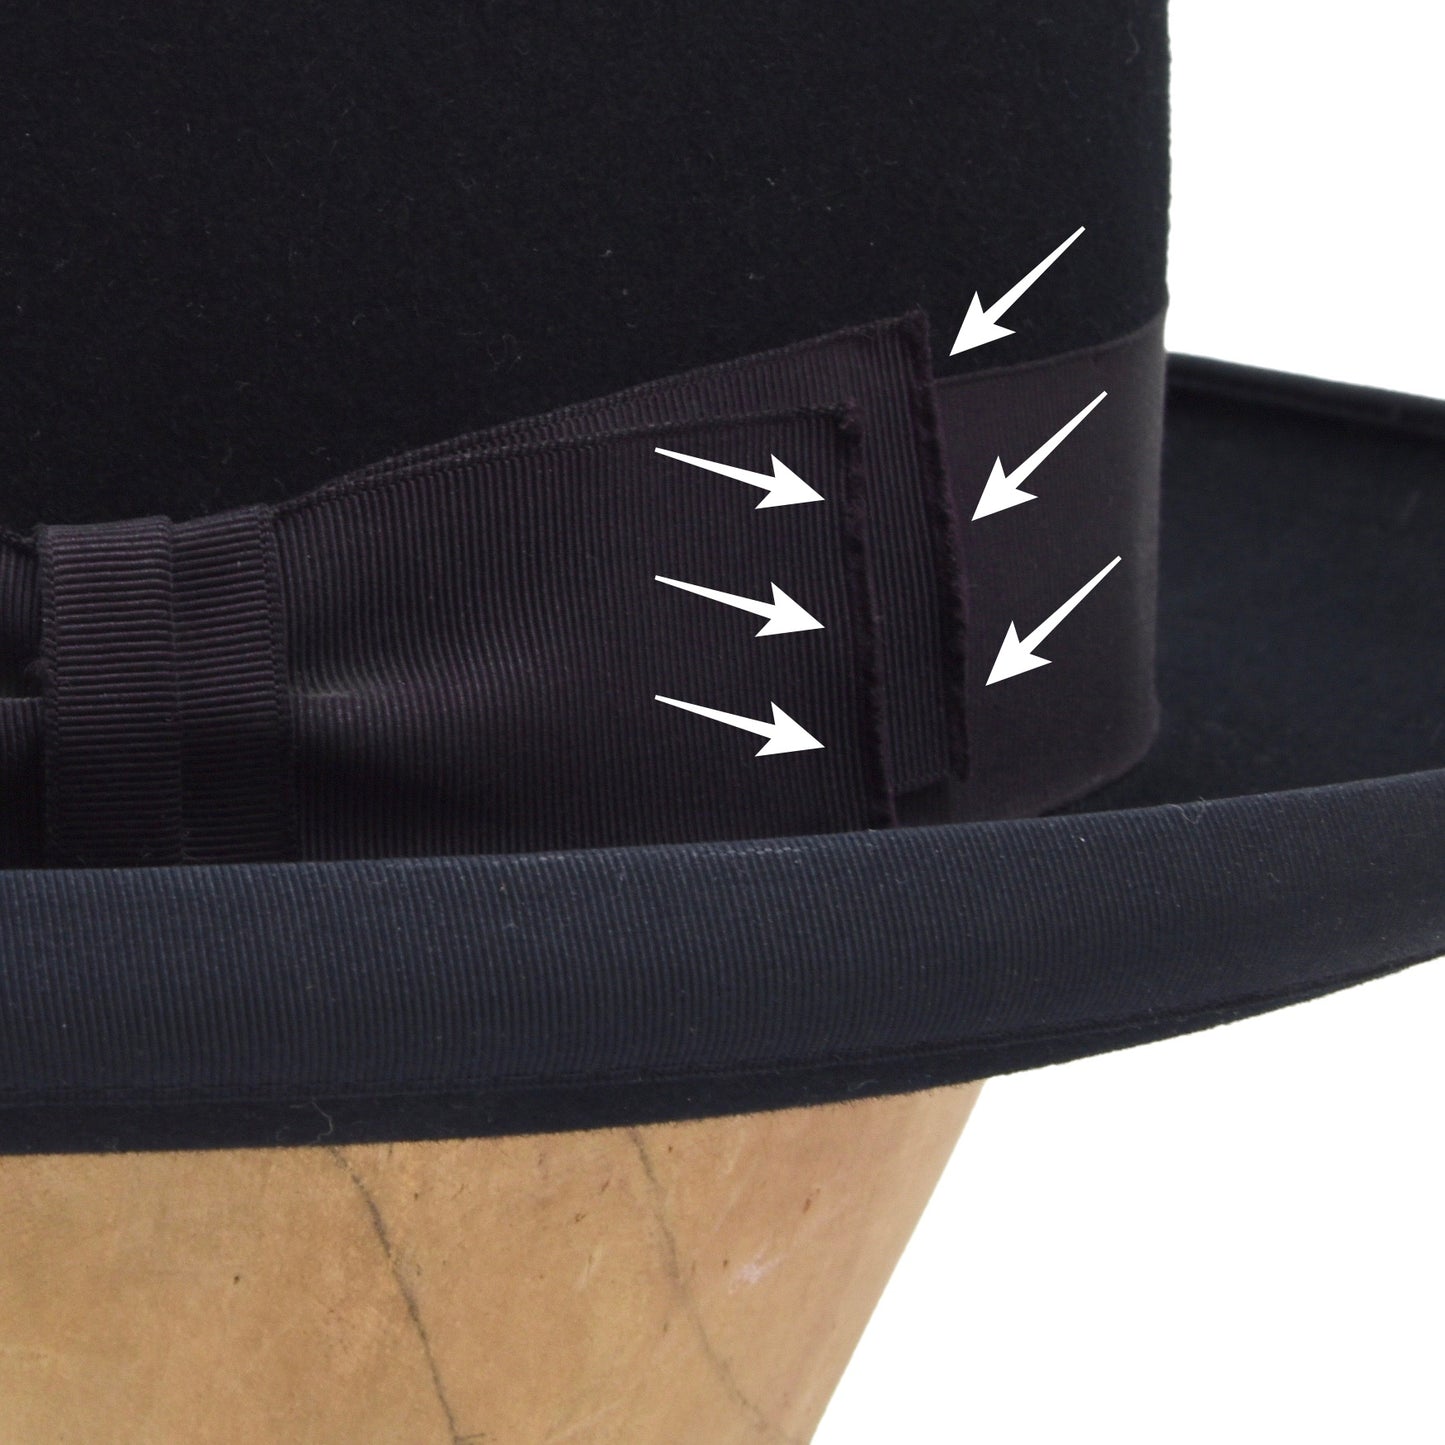 Vintage Preis Hut Homburg Hat Size 57 - Midnight Blue or Black